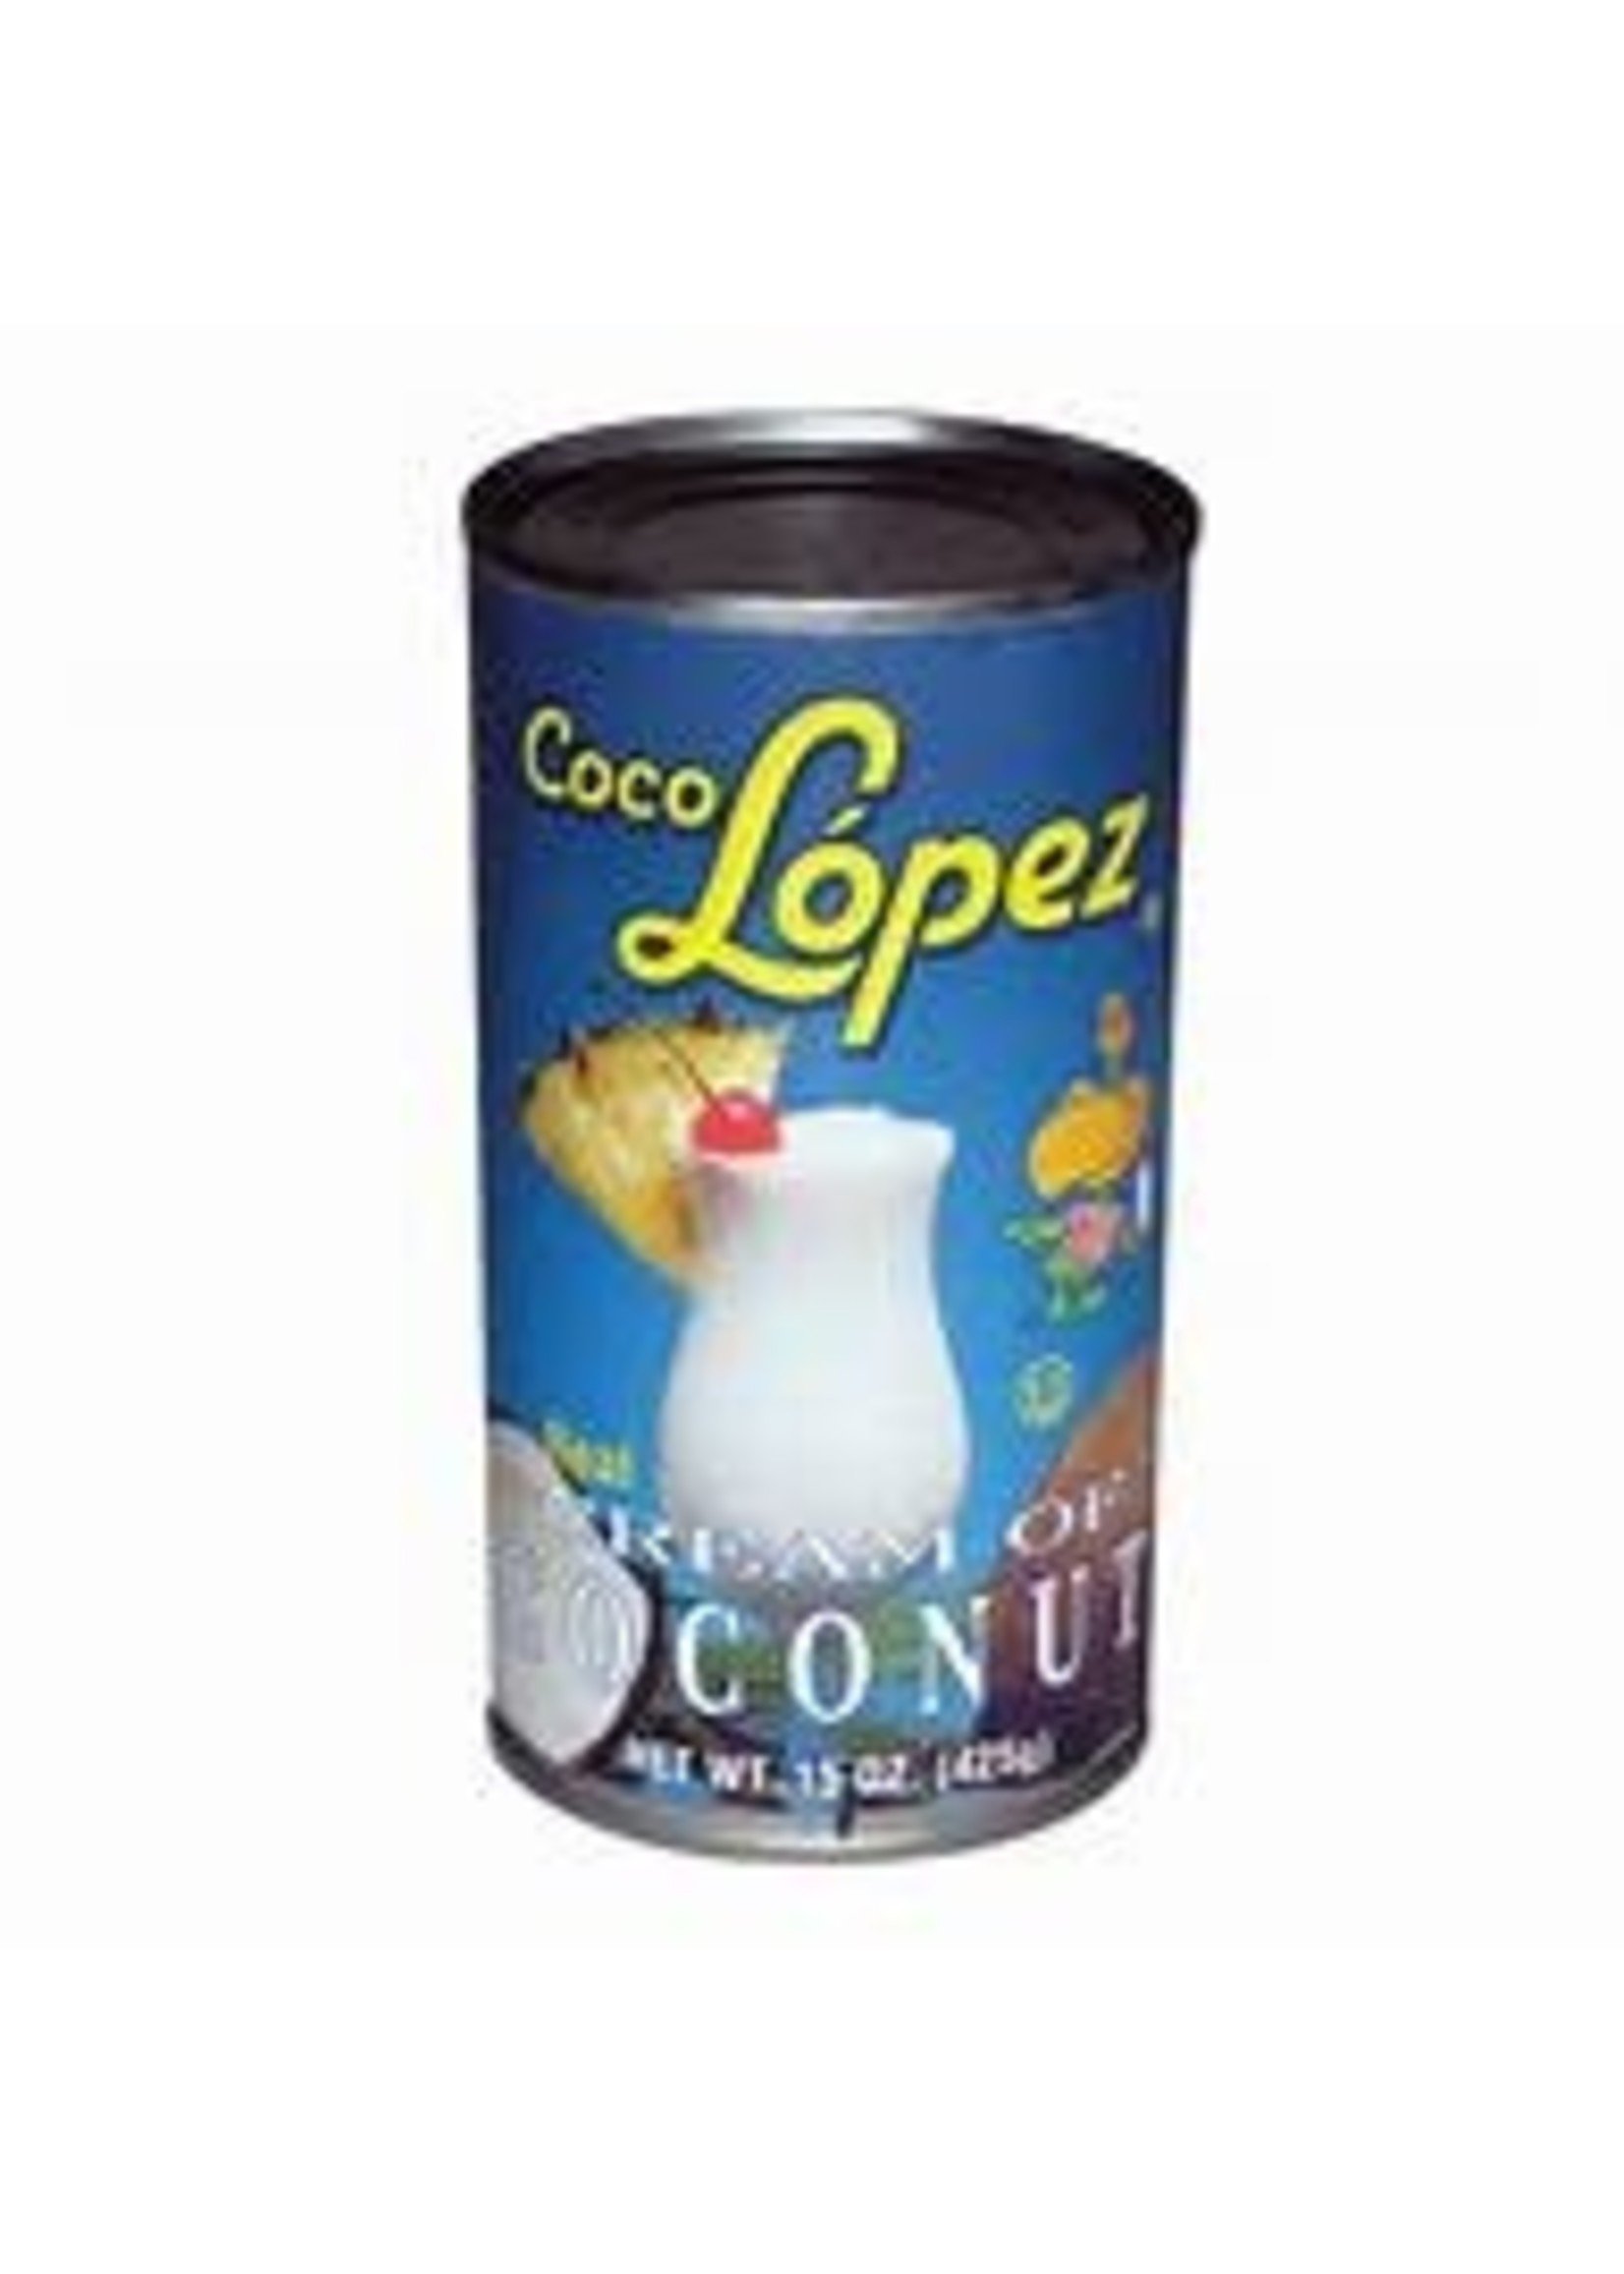 COCO LOPEZ COCO LOPEZ	CREAM OF COCONUT	15 OZ